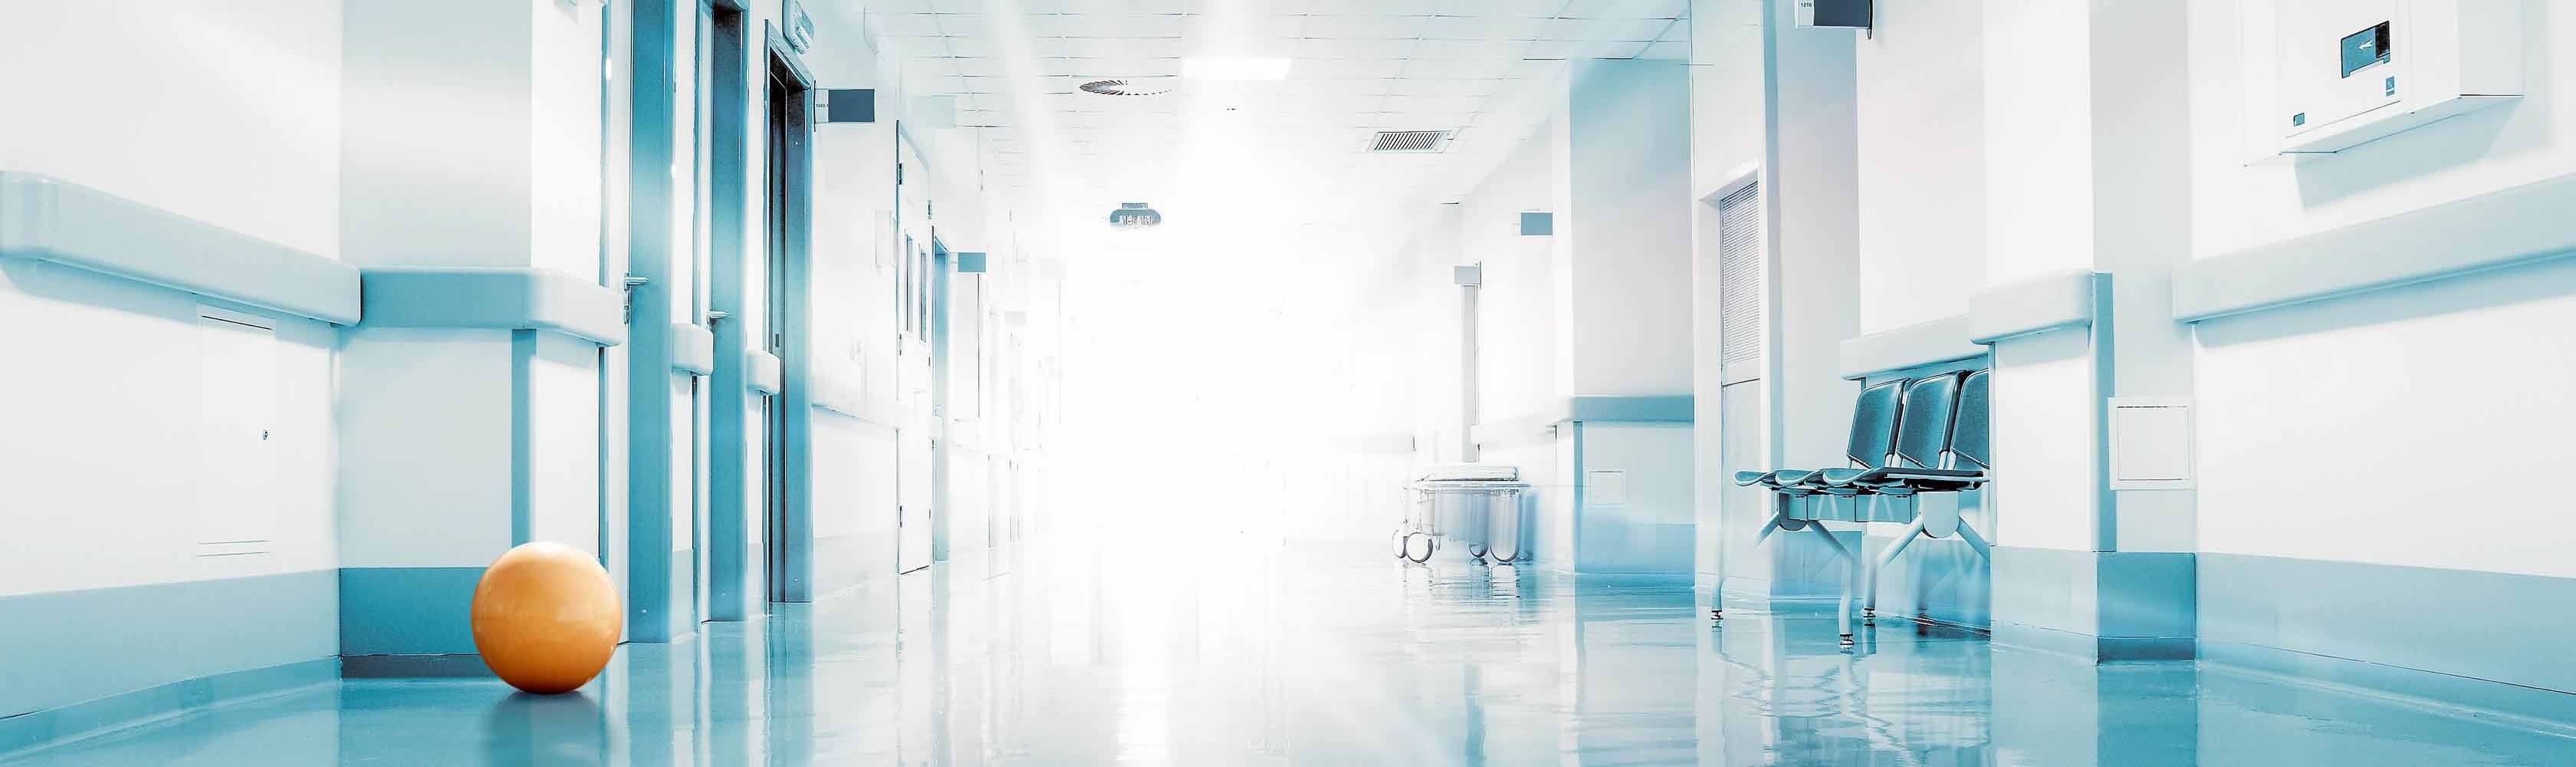 Spitalbewertung Gesundheitskompass CONCORDIA